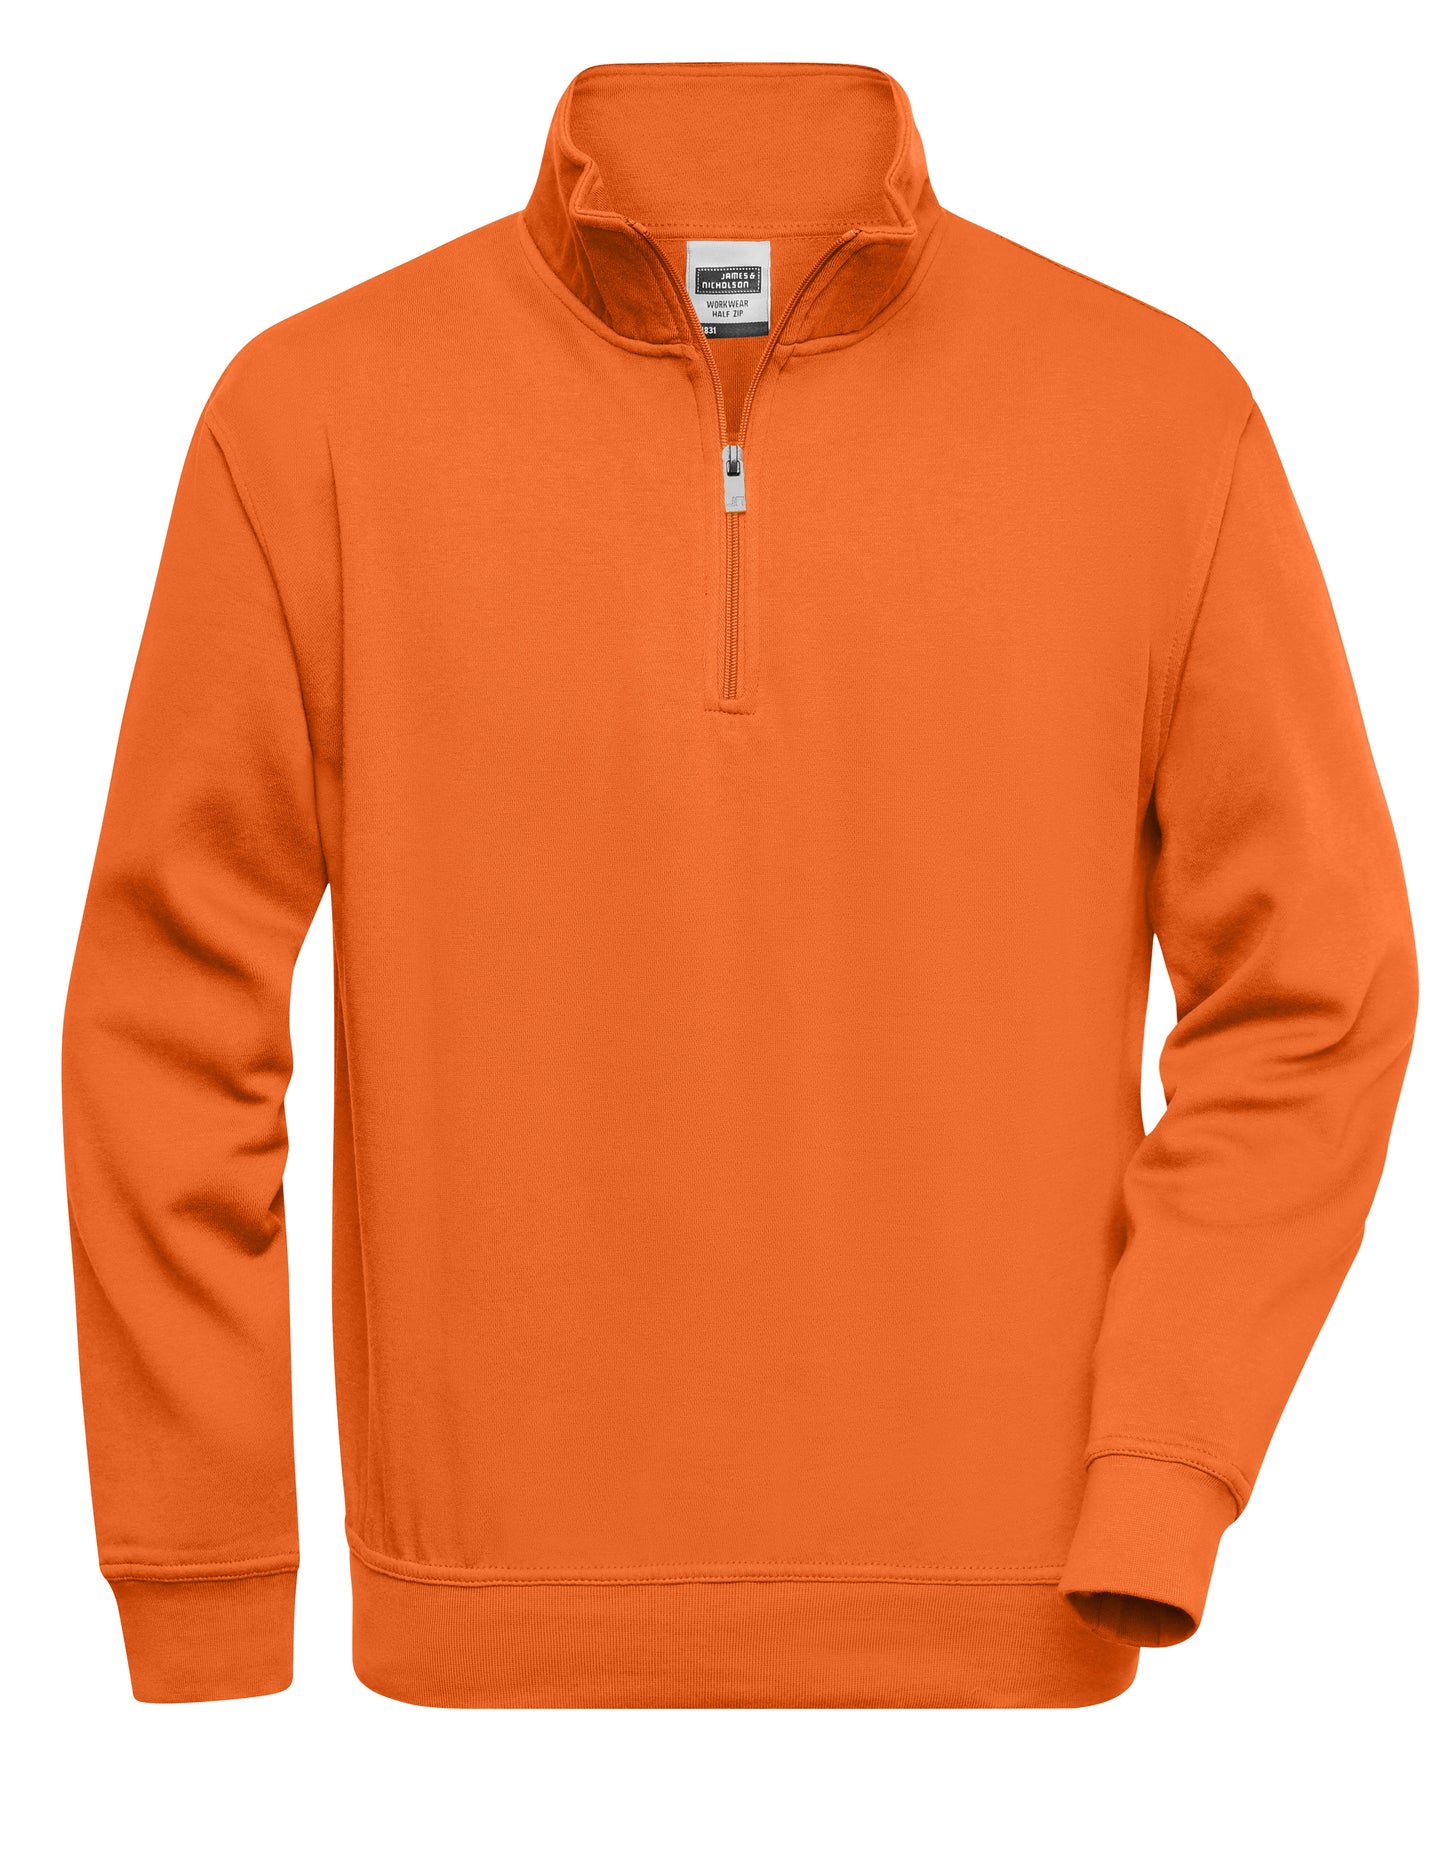 Personalisierbares Unisex Half Zip Sweatshirt - Weitere Farben